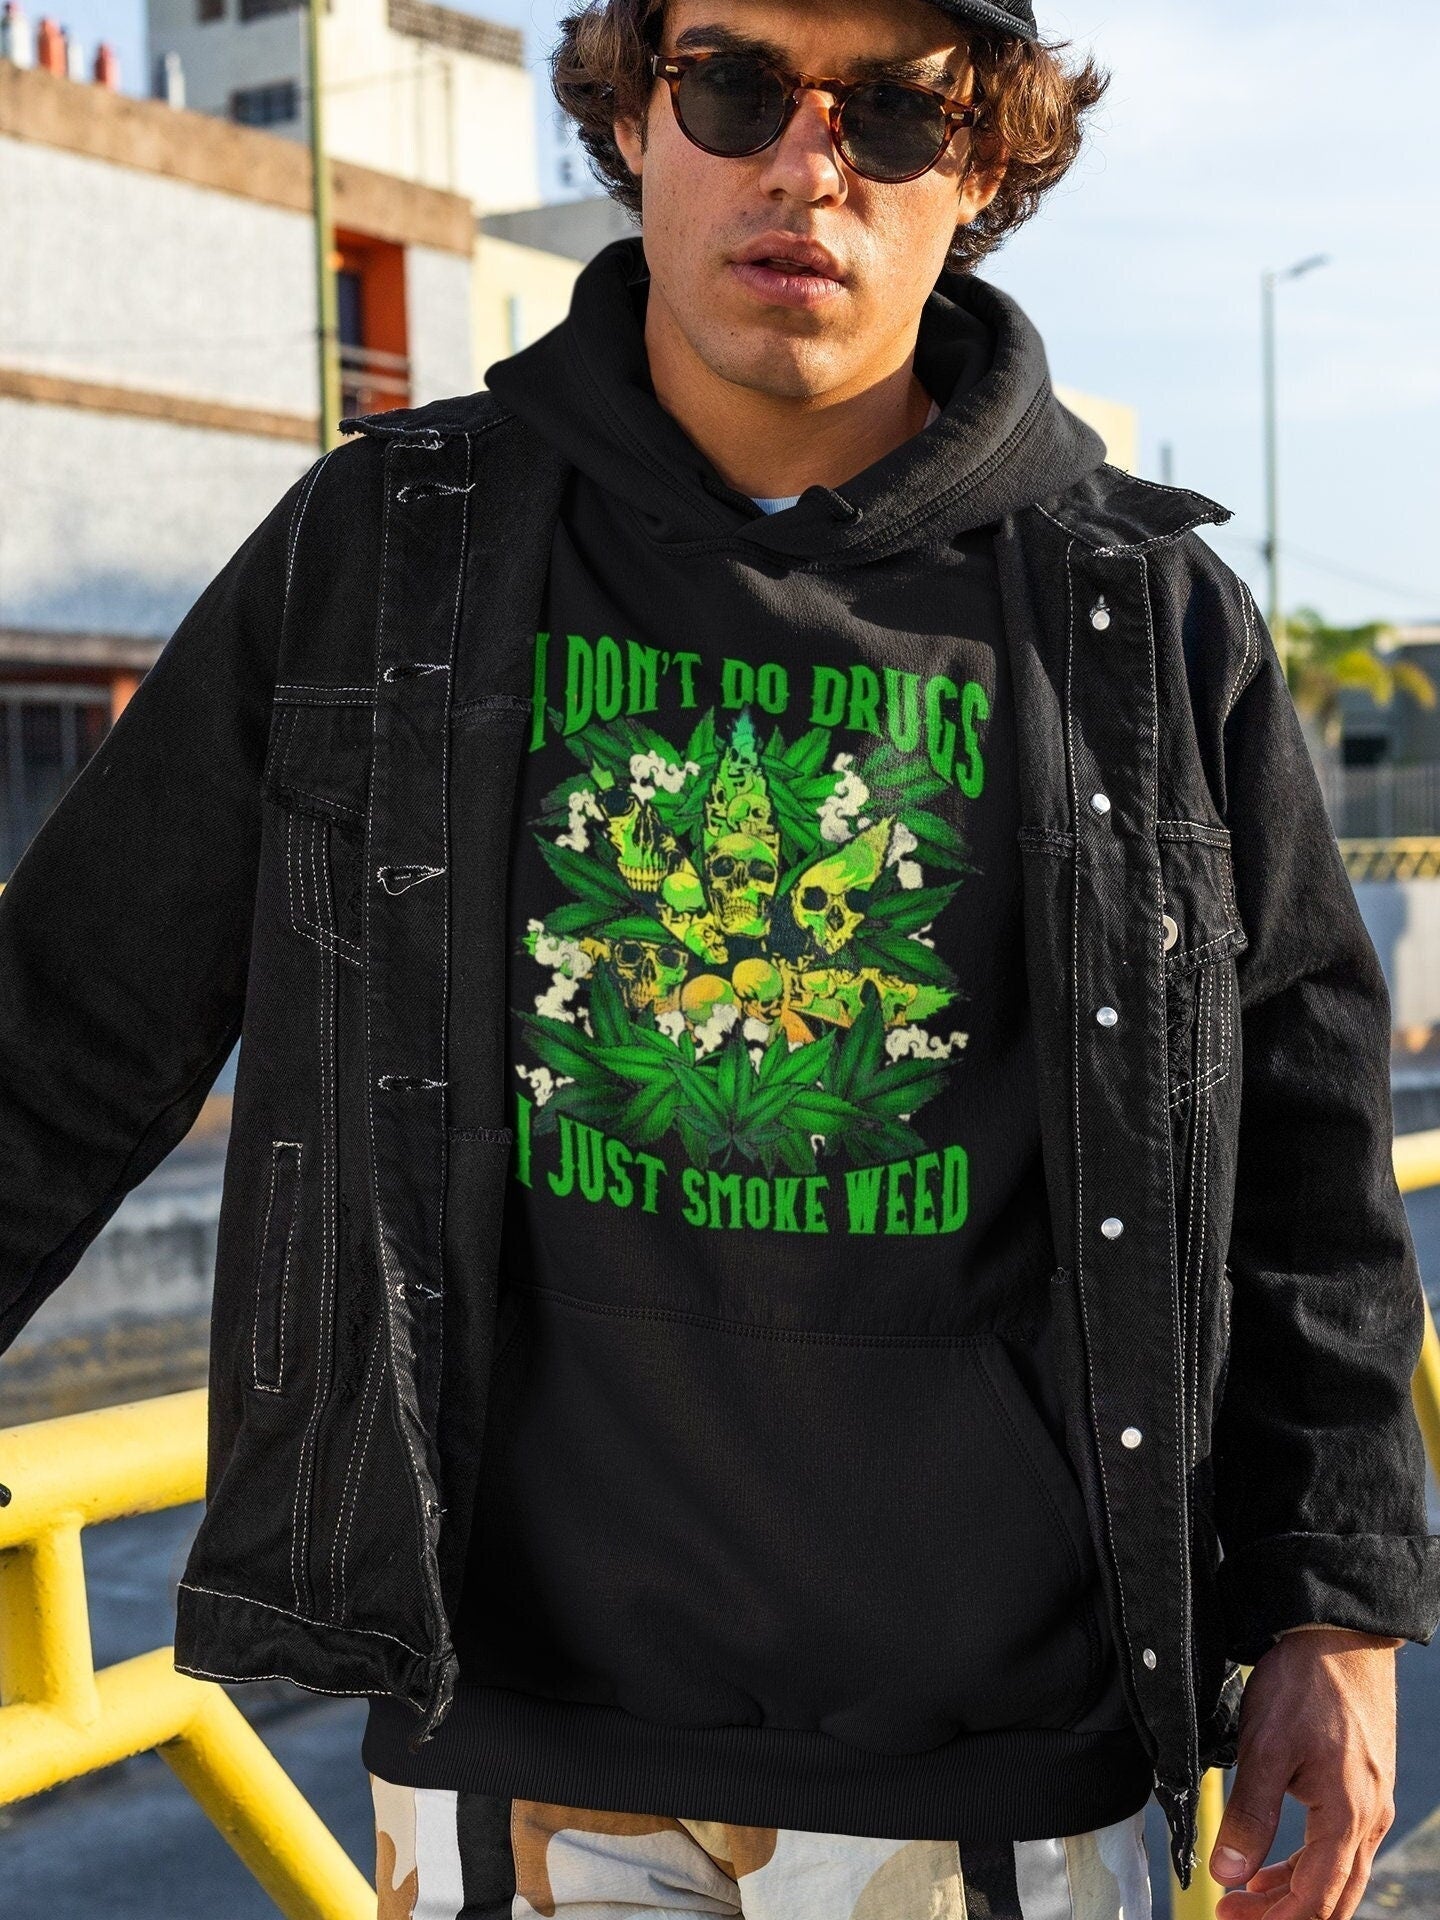 I Don't Do Drugs I Just Smoke Weed, Funny Stoner Shirt HMDesignStudioUS